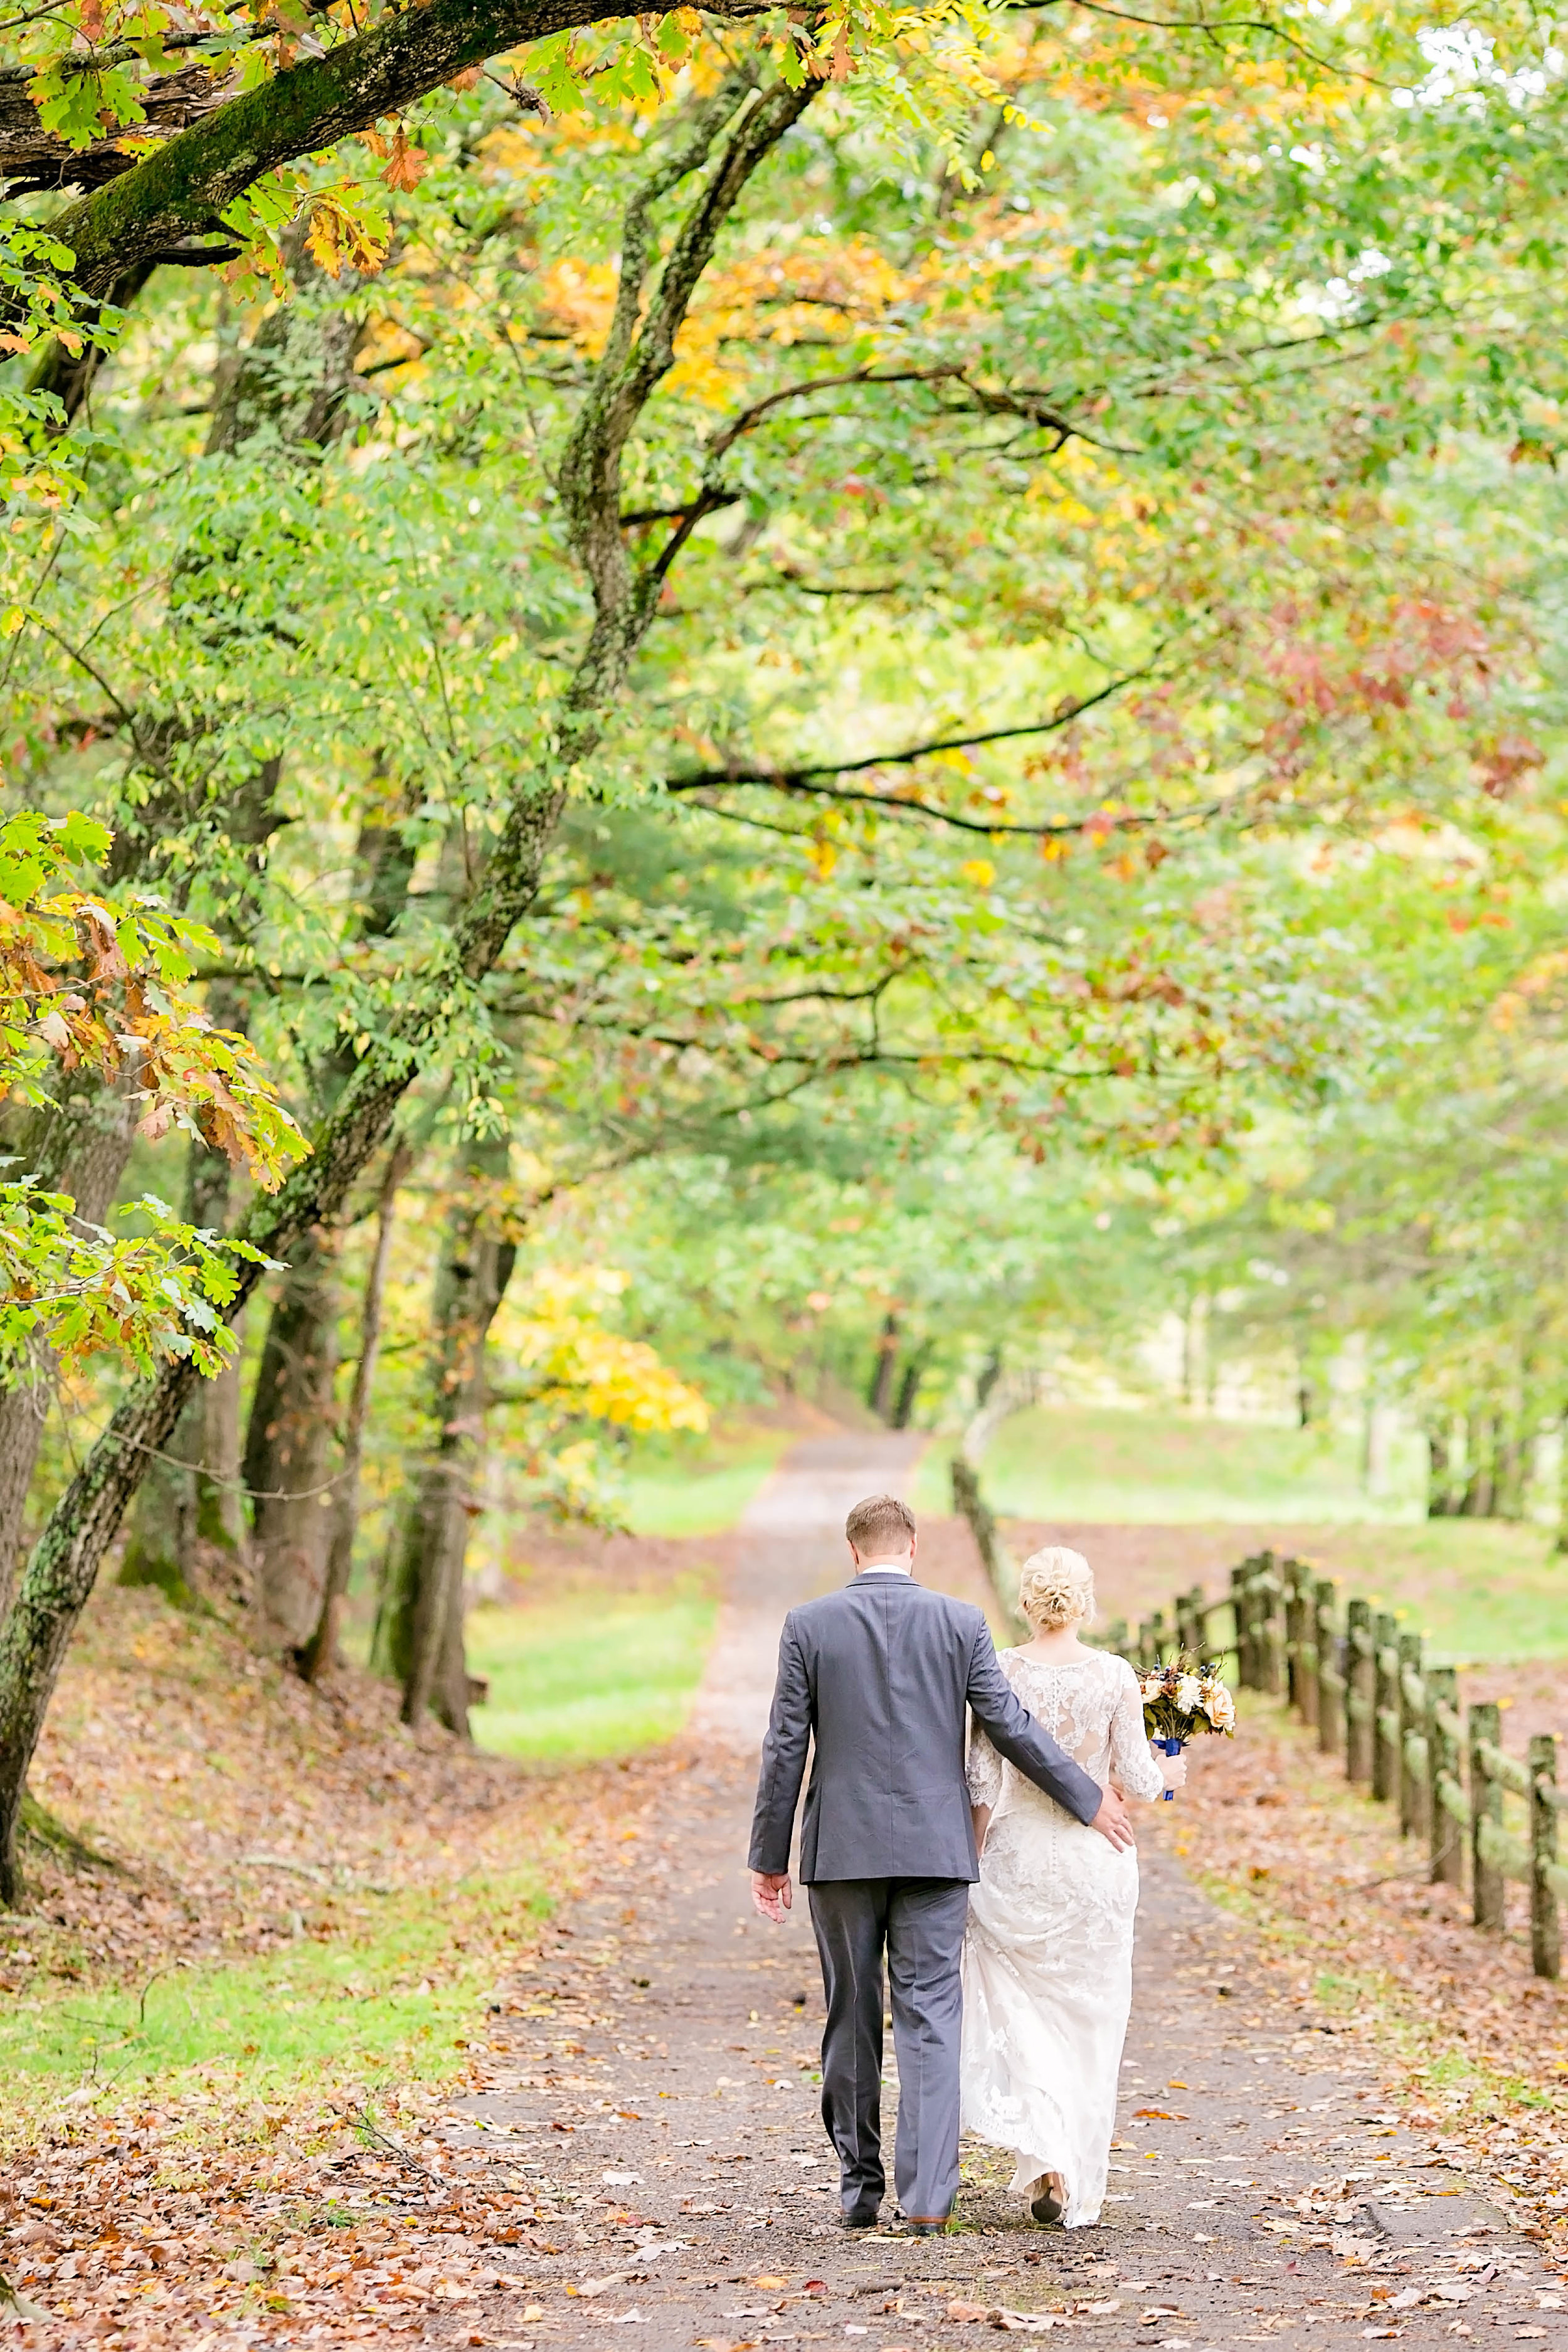 Wedding couple walking on tree-lined path